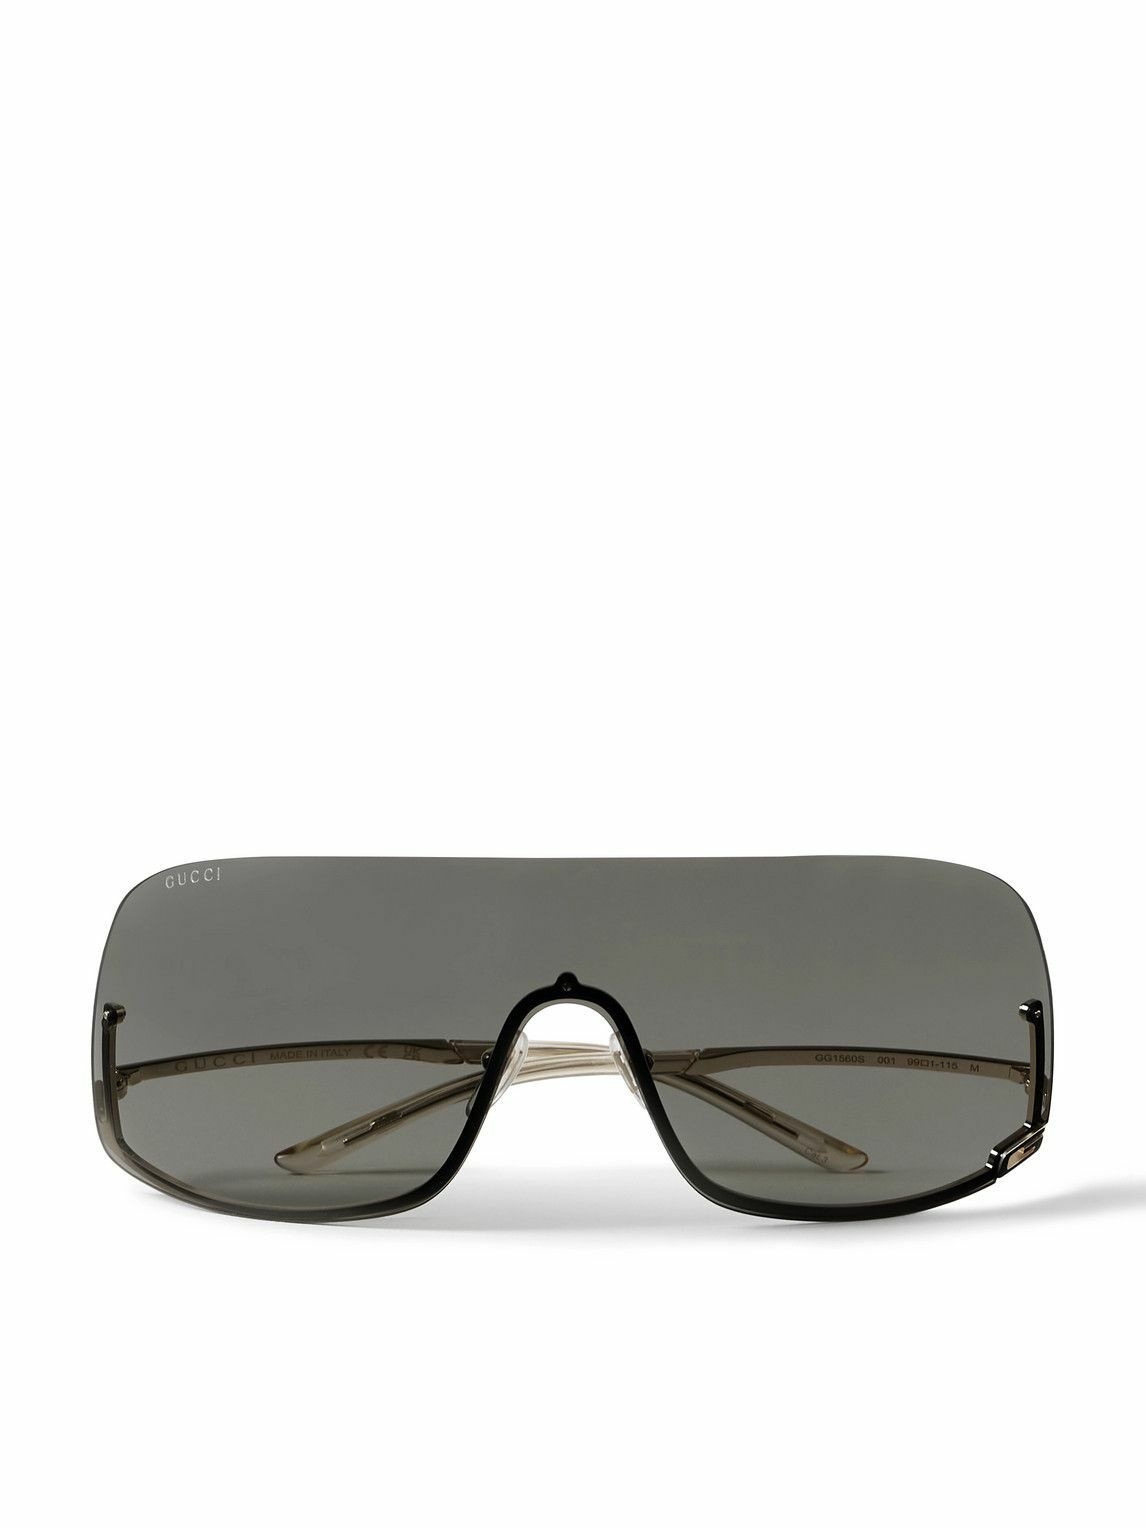 Gucci™ GG0687S Sport Sunglasses | EyeOns.com